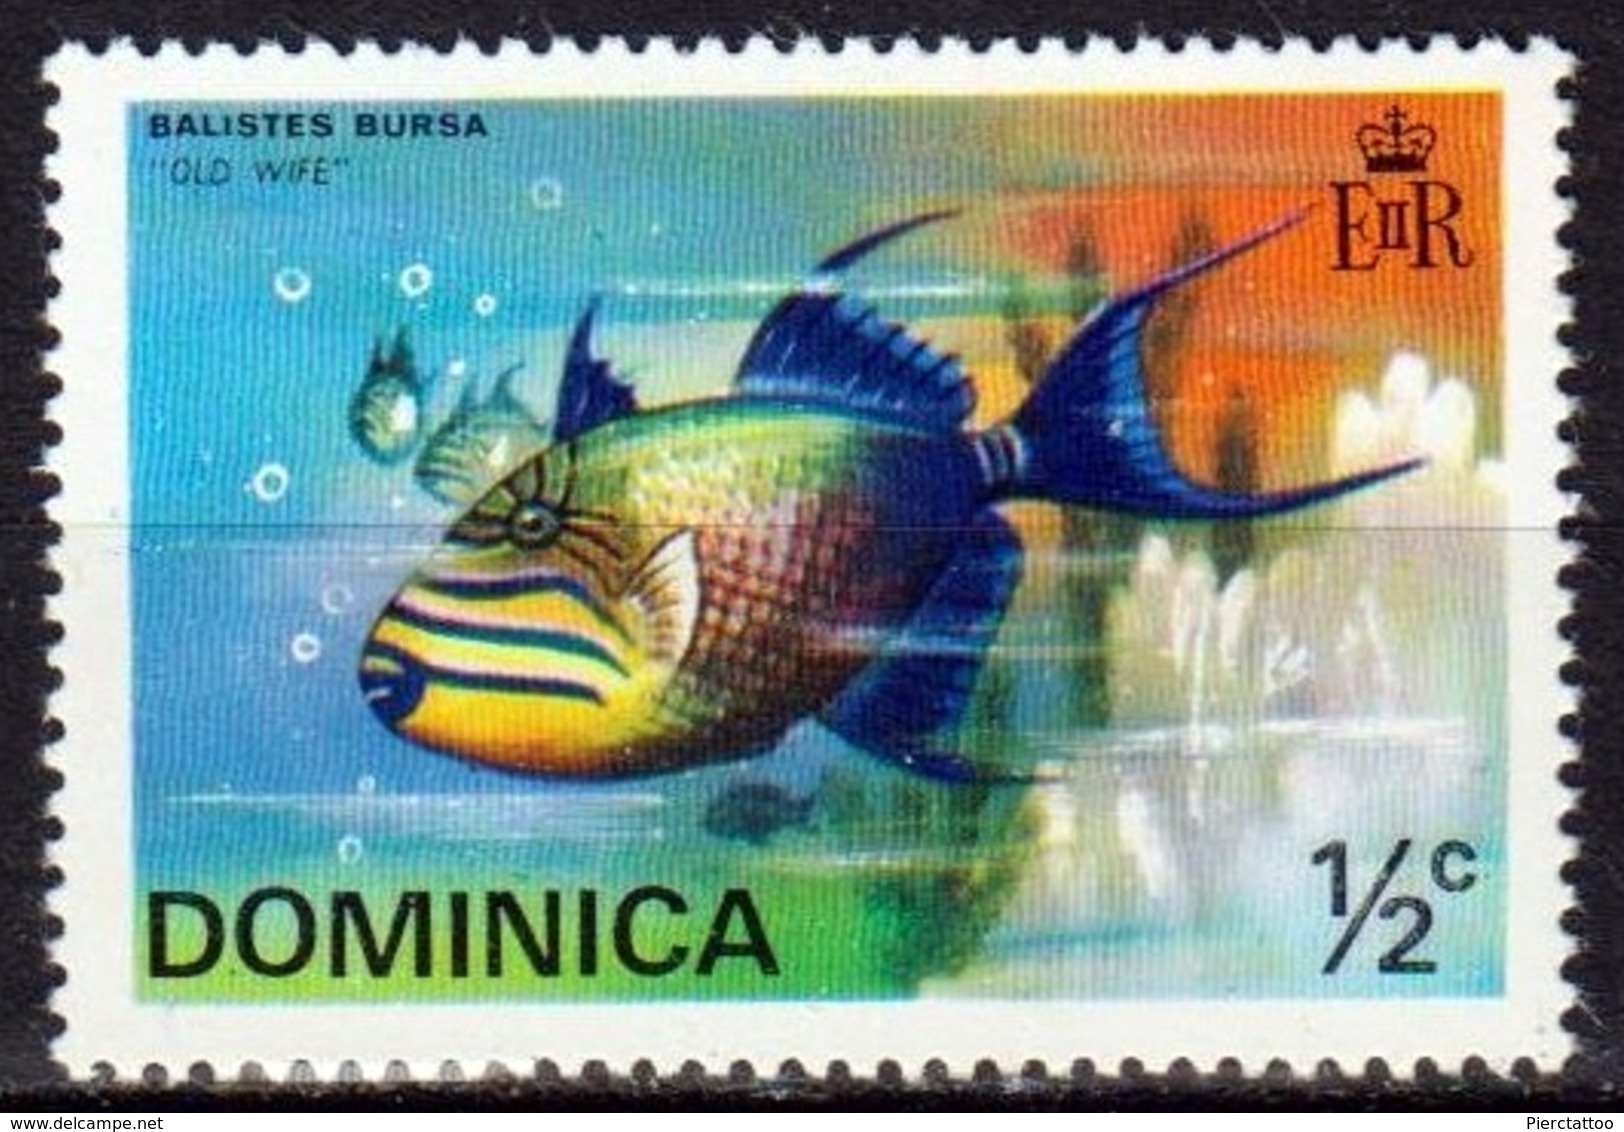 Balistes Bursa/baliste Boomerang (Poisson/Animaux) - Dominique - 1975 - YT 414 - Neuf - Dominica (1978-...)